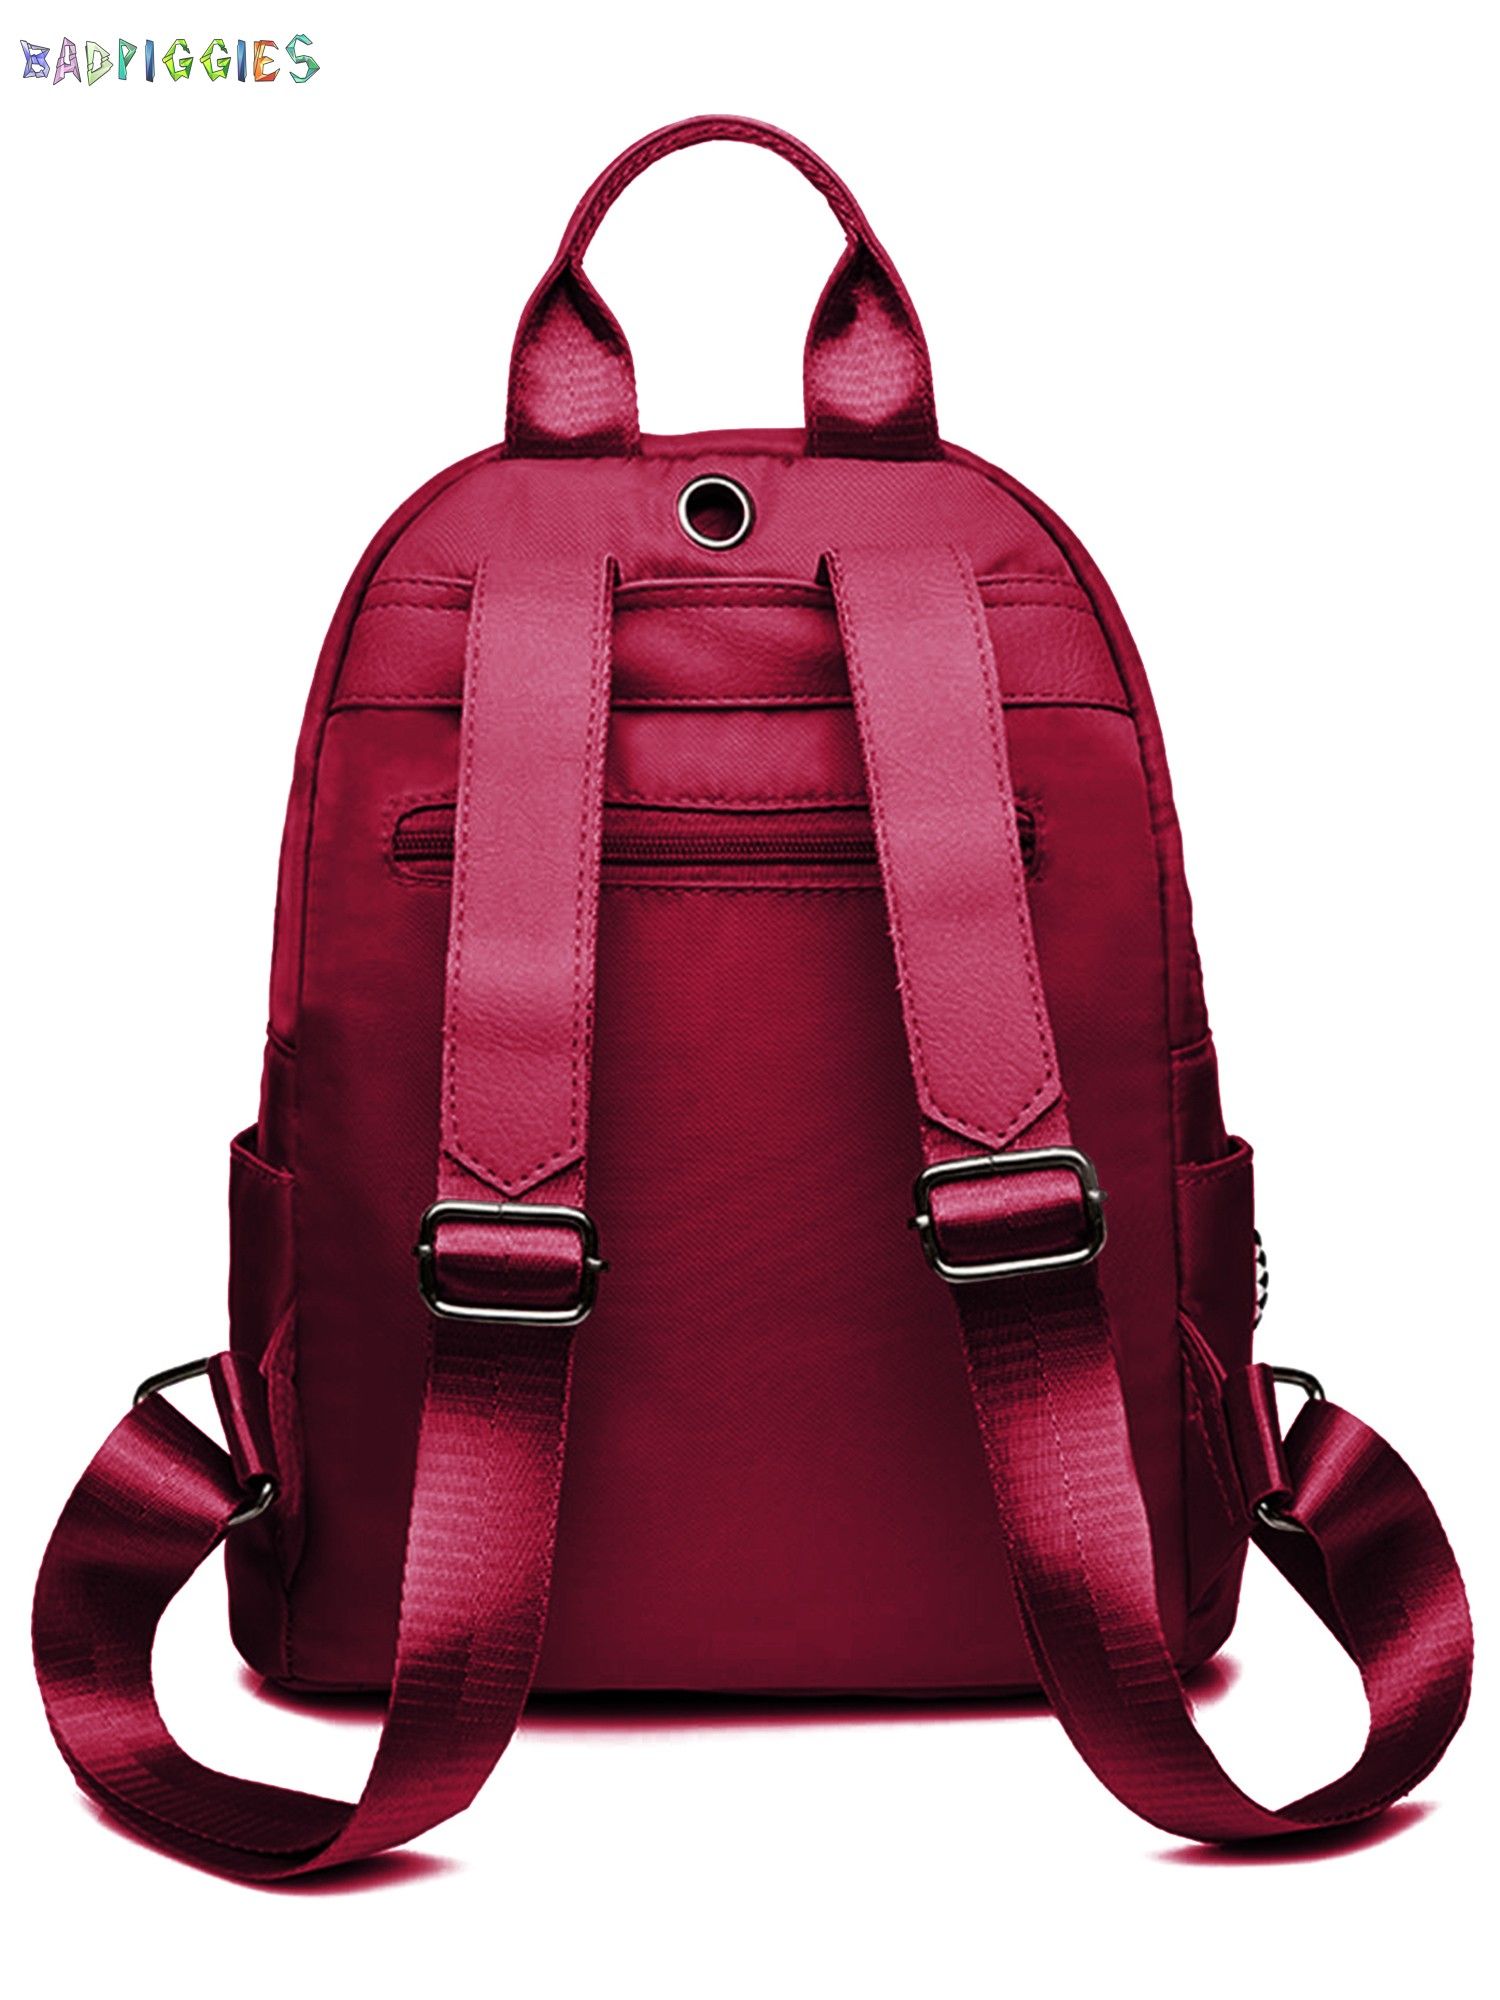 BadPiggies Women Backpack Waterproof Oxford Handbag Shoulder Travel Bag School Bag Anti-theft Rucksack - image 4 of 11